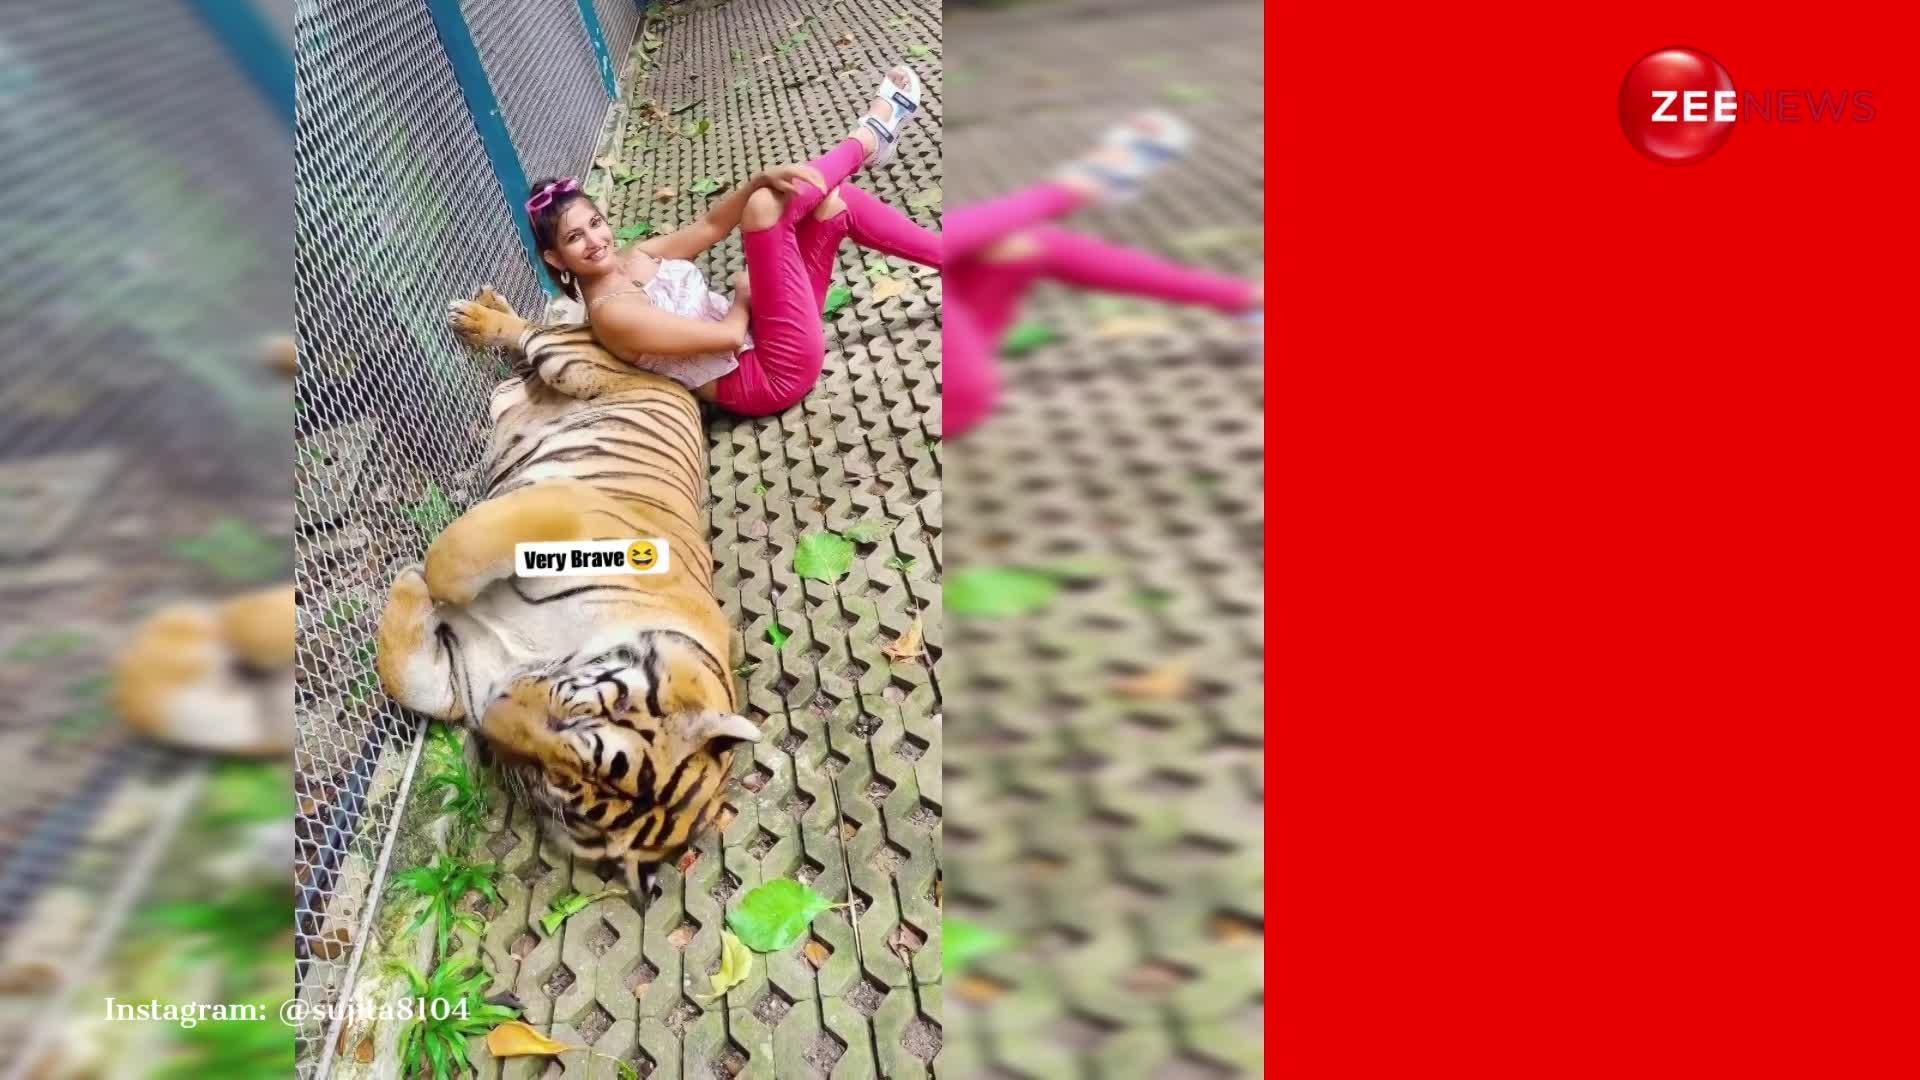 VIDEO: टाइगर से चिपककर फोटो खिंचवाने लगी खूबसूरत महिला, बाघ ने ली करवट तो दुम दबाकर भागी